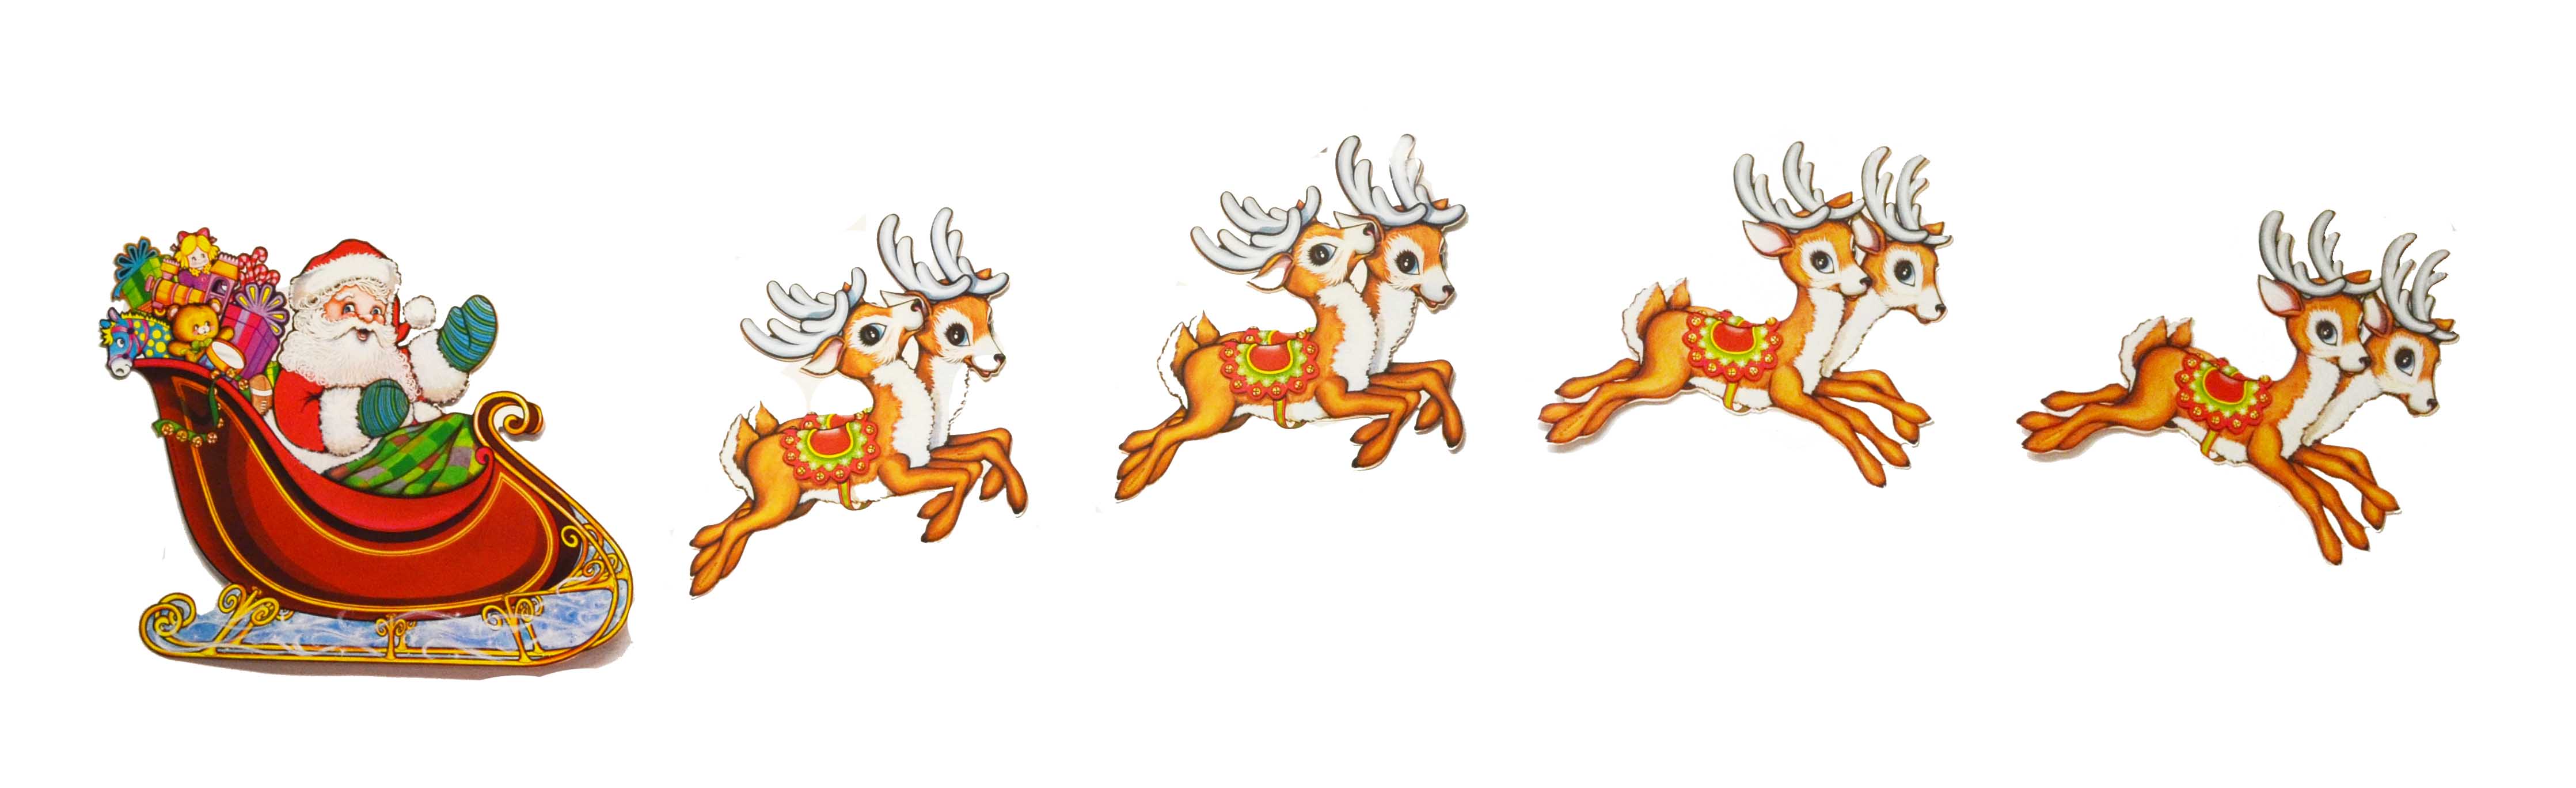 clipart santa sleigh and reindeer clip art 32806